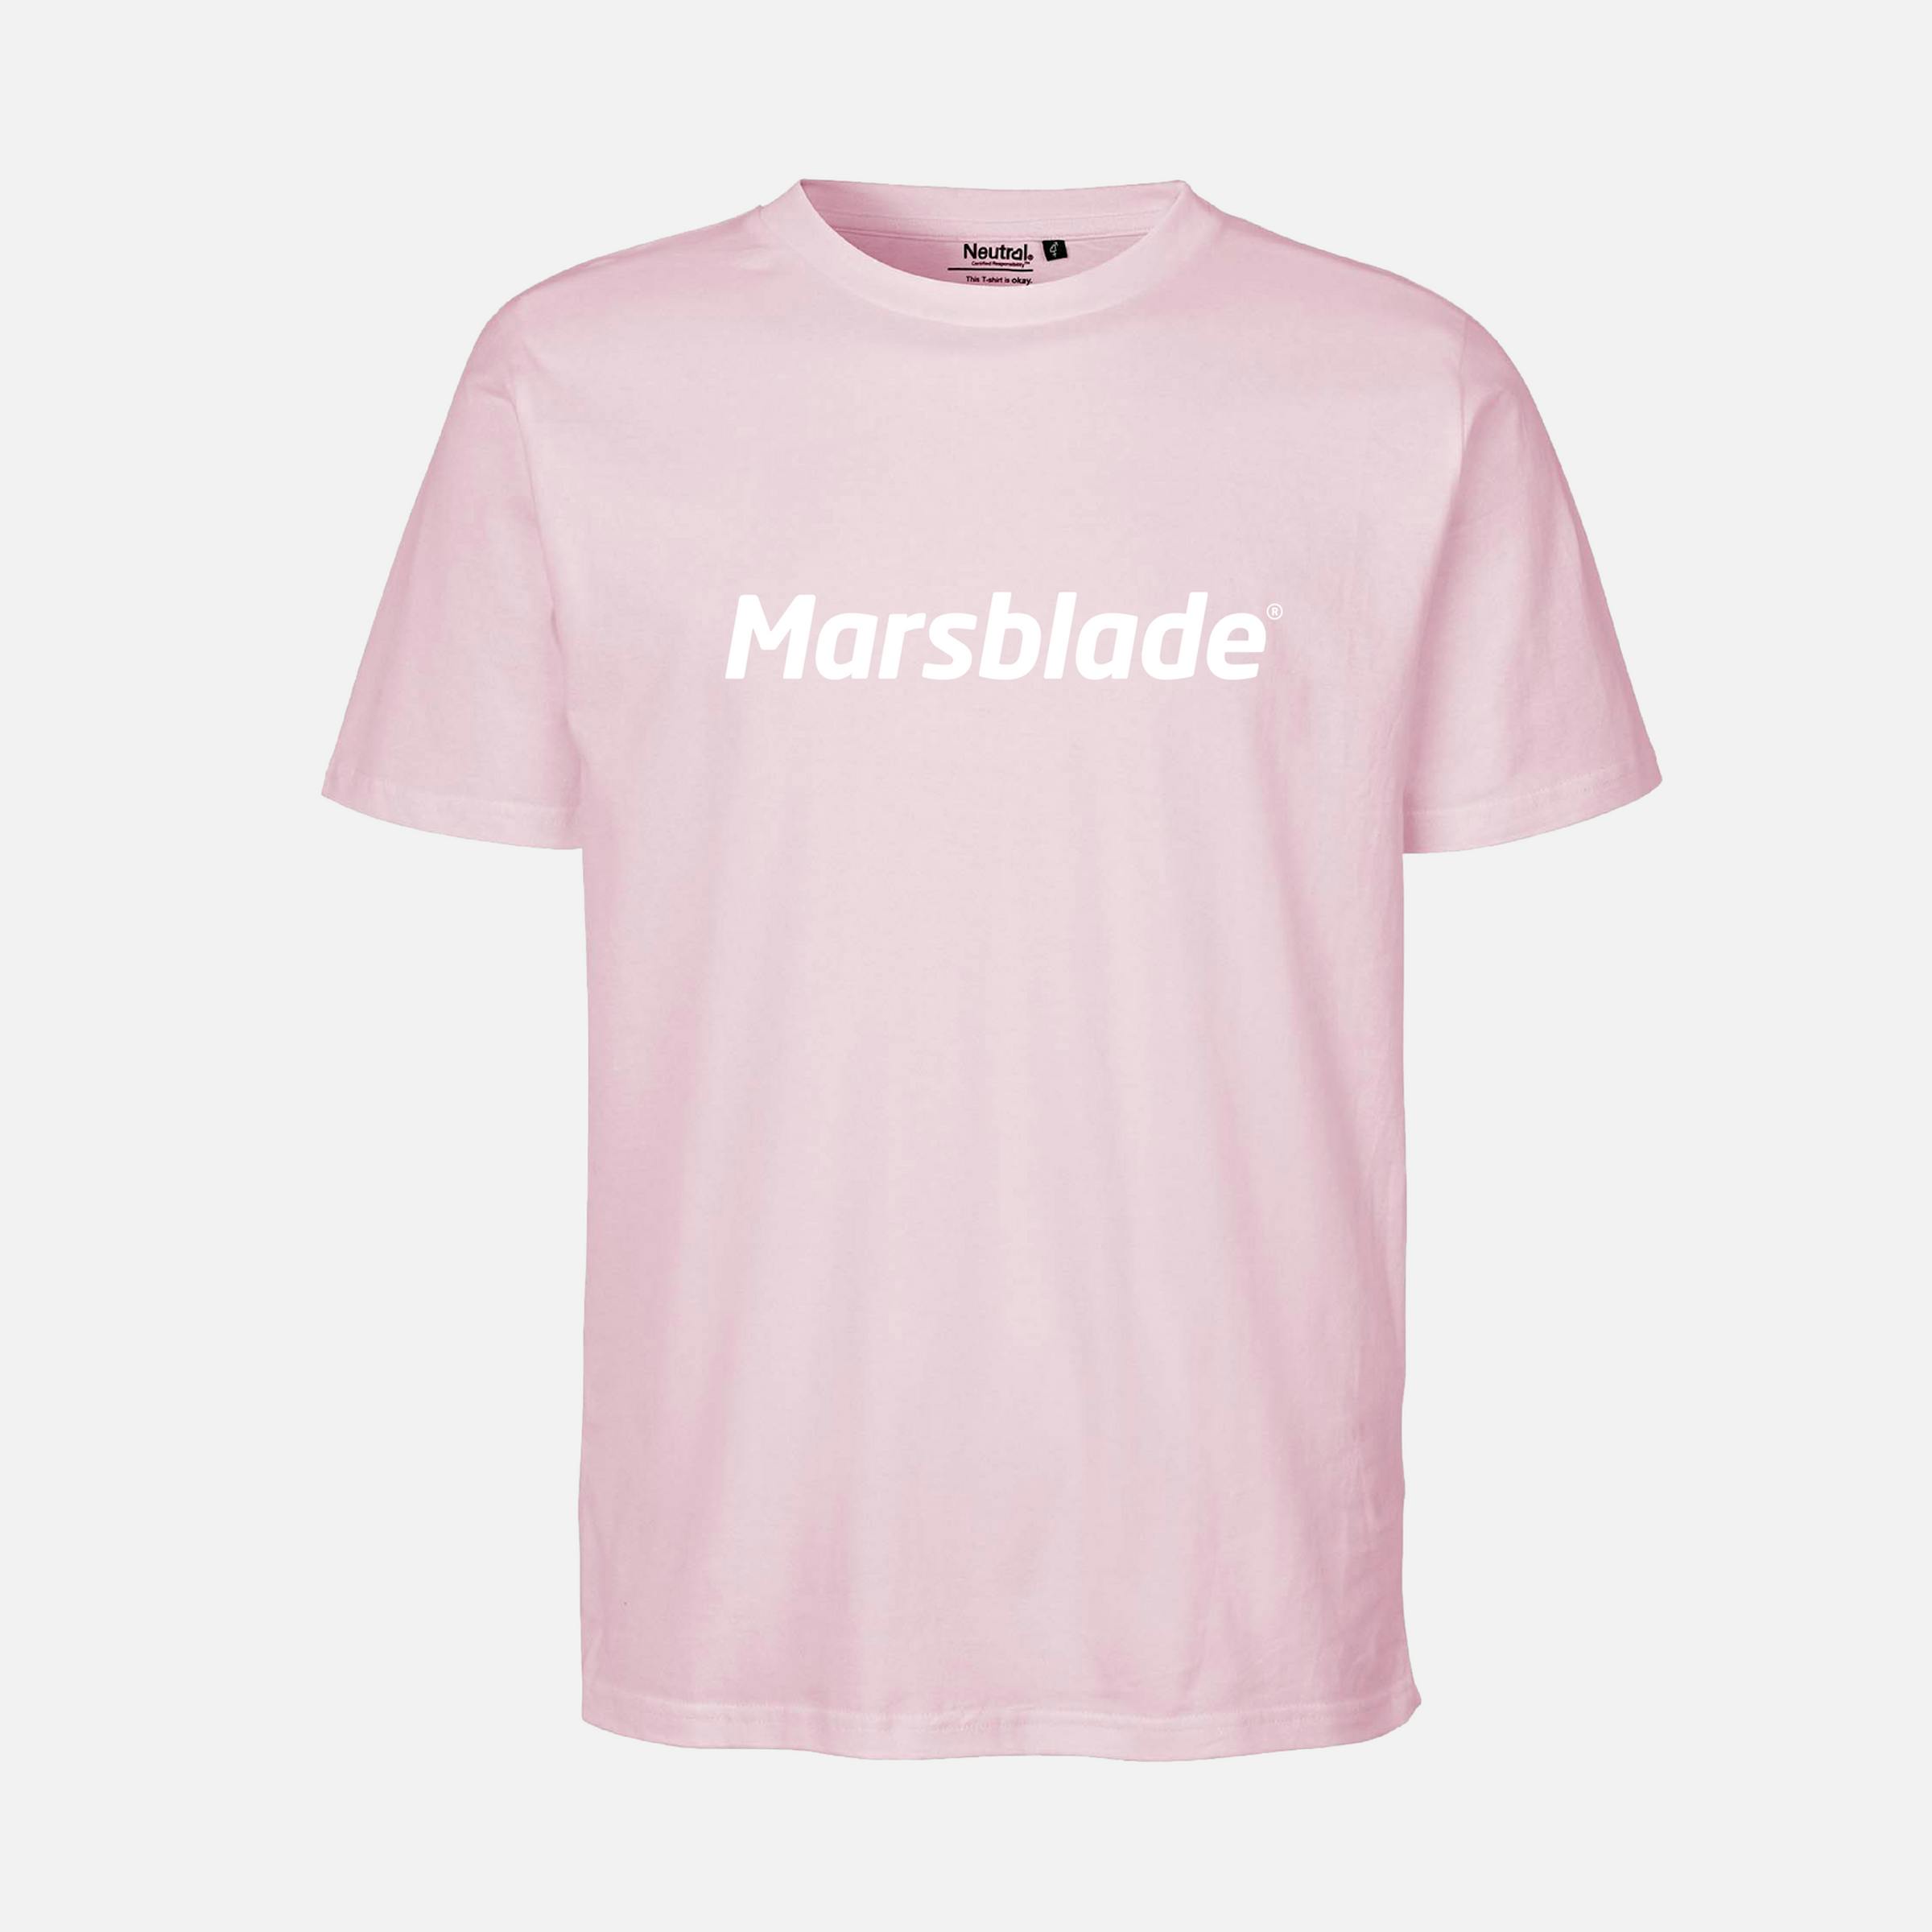 Marsblade T-Shirt - Pink